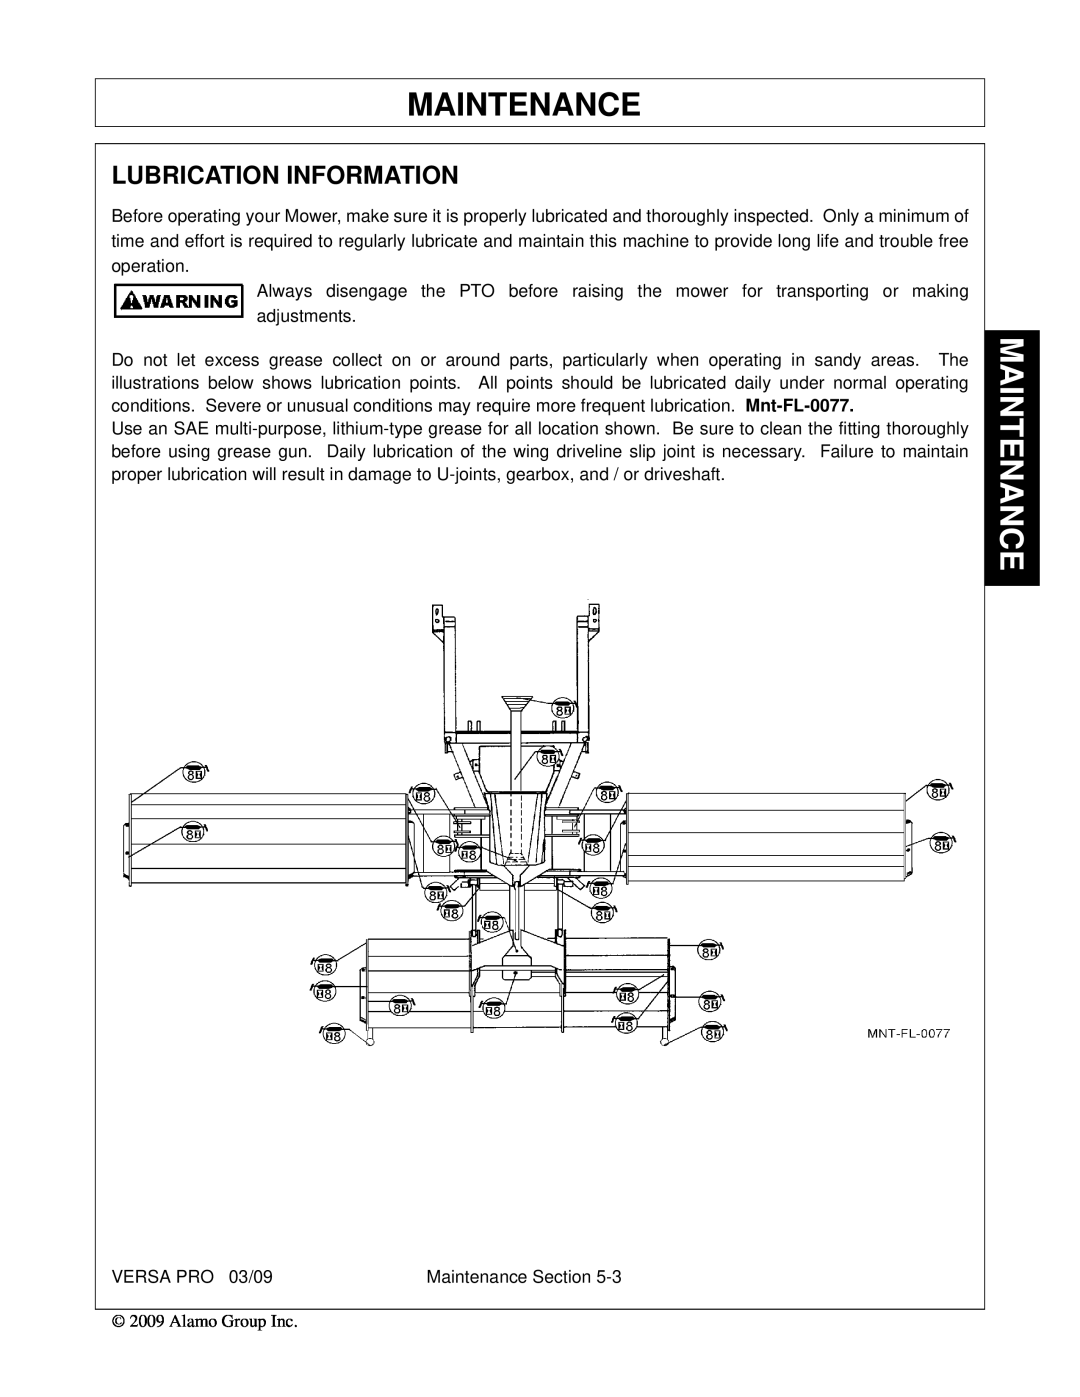 Alamo 803350C manual Lubrication Information, Maintenance 